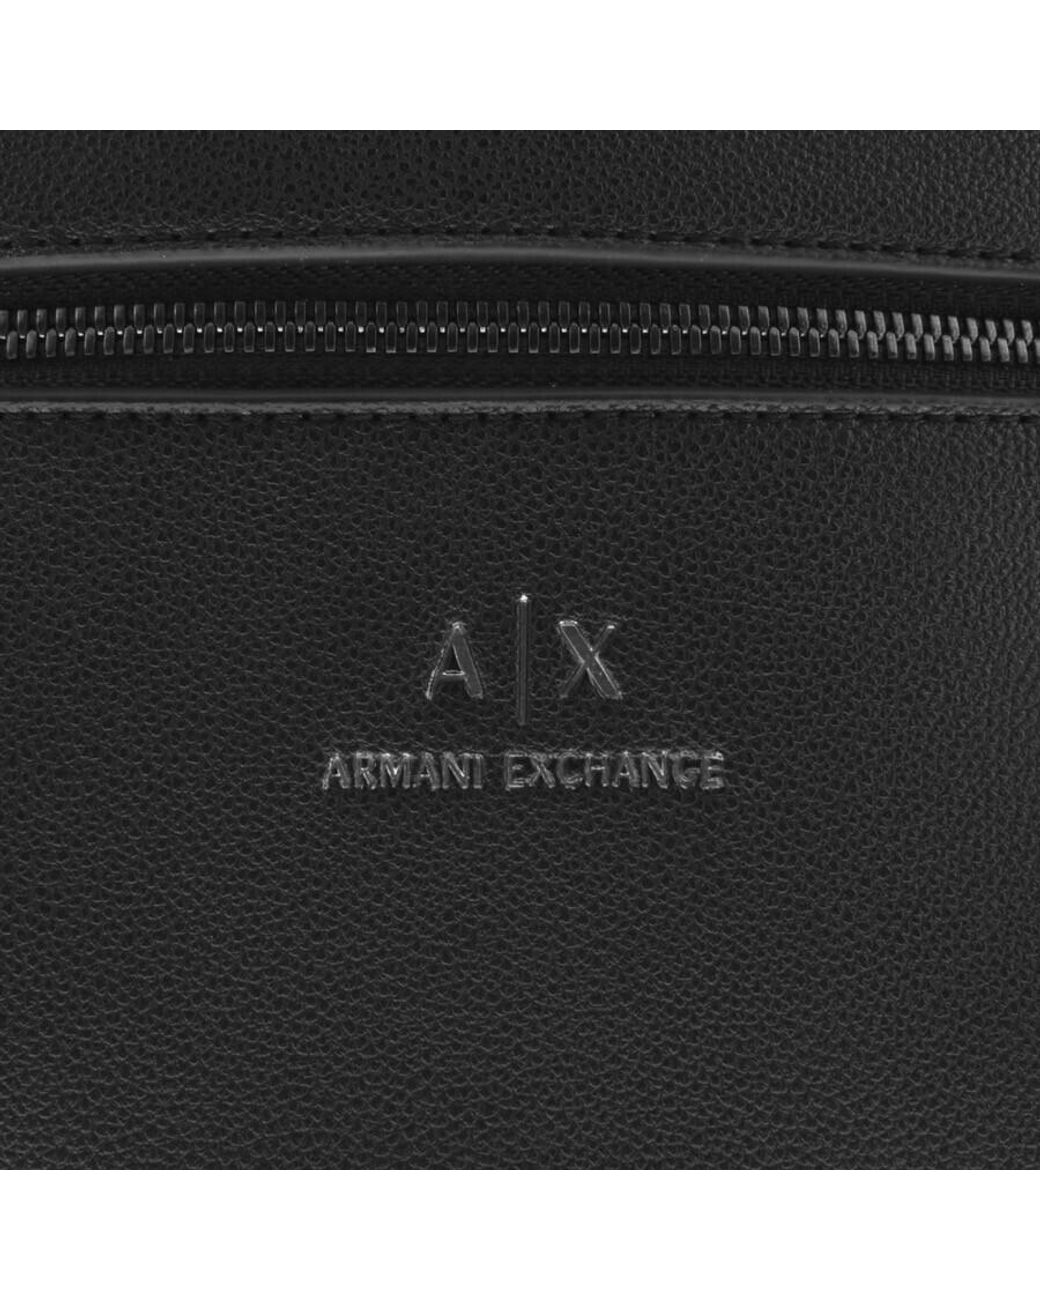 Armani Exchange Top Zip Handbags | Mercari